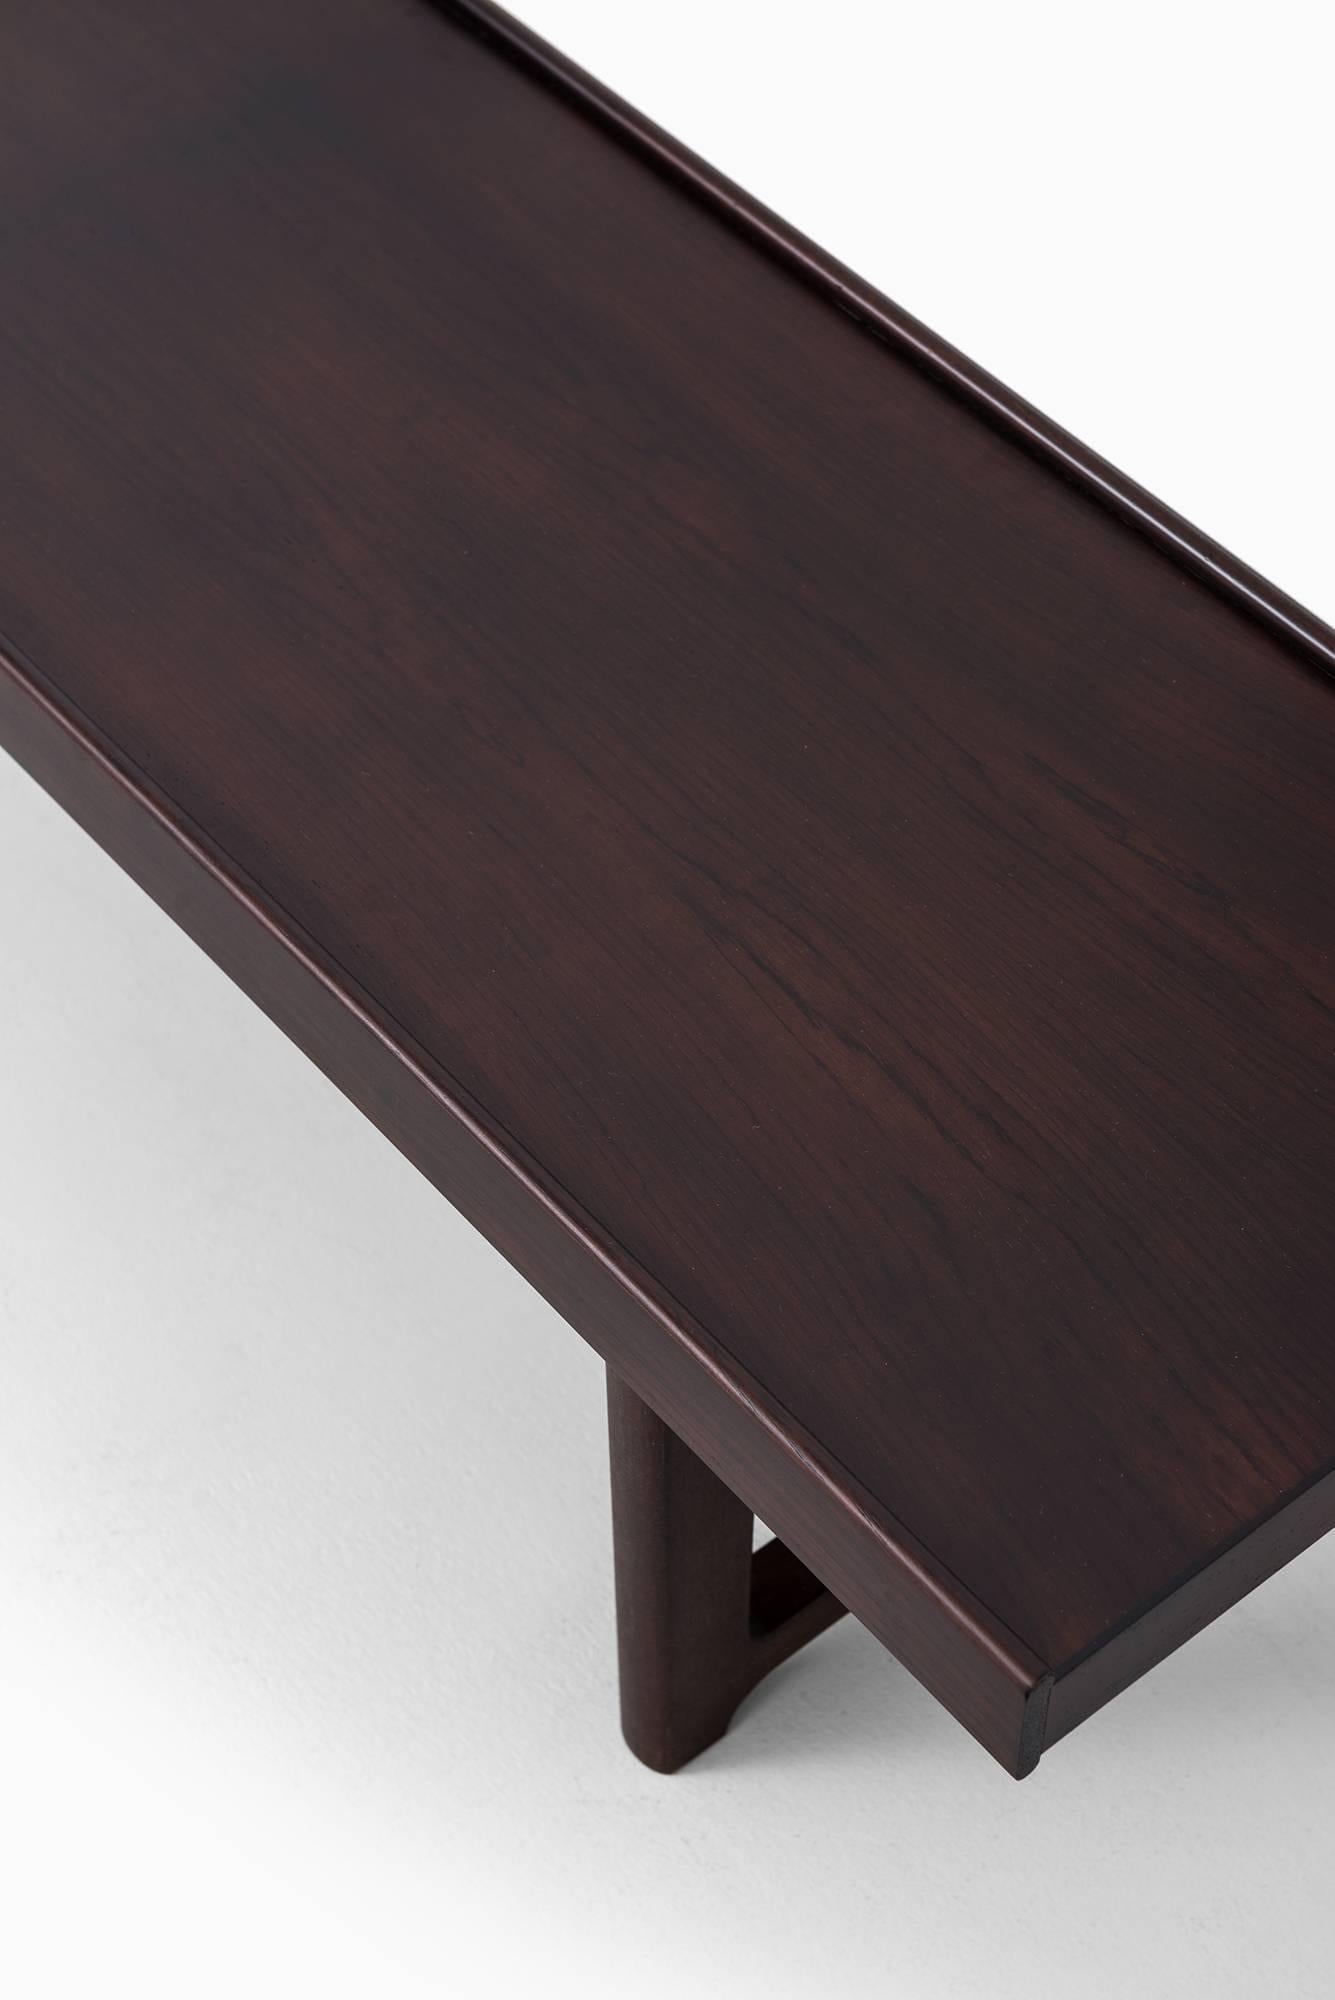 Bench/side table model Krobo designed by Torbjørn Afdal. Produced by Bruksbo in Norway.